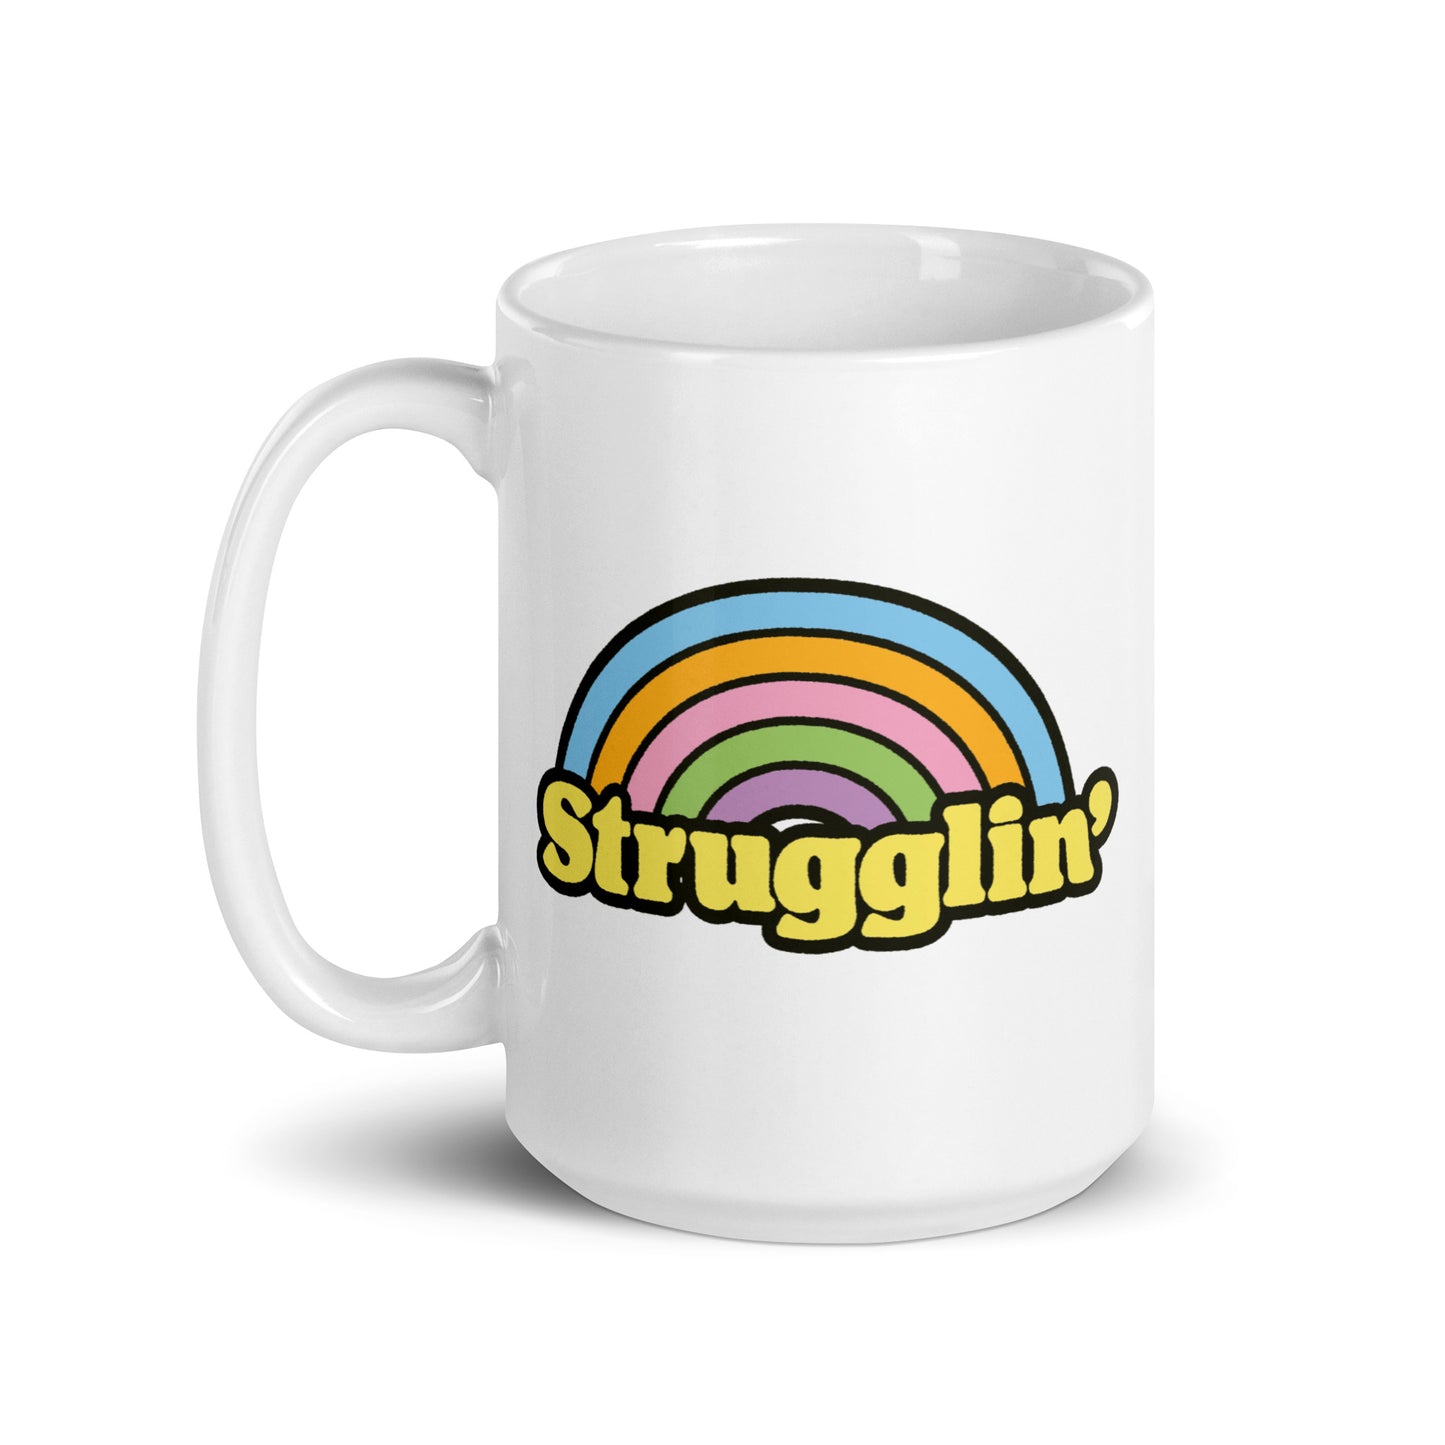 Strugglin' Mug